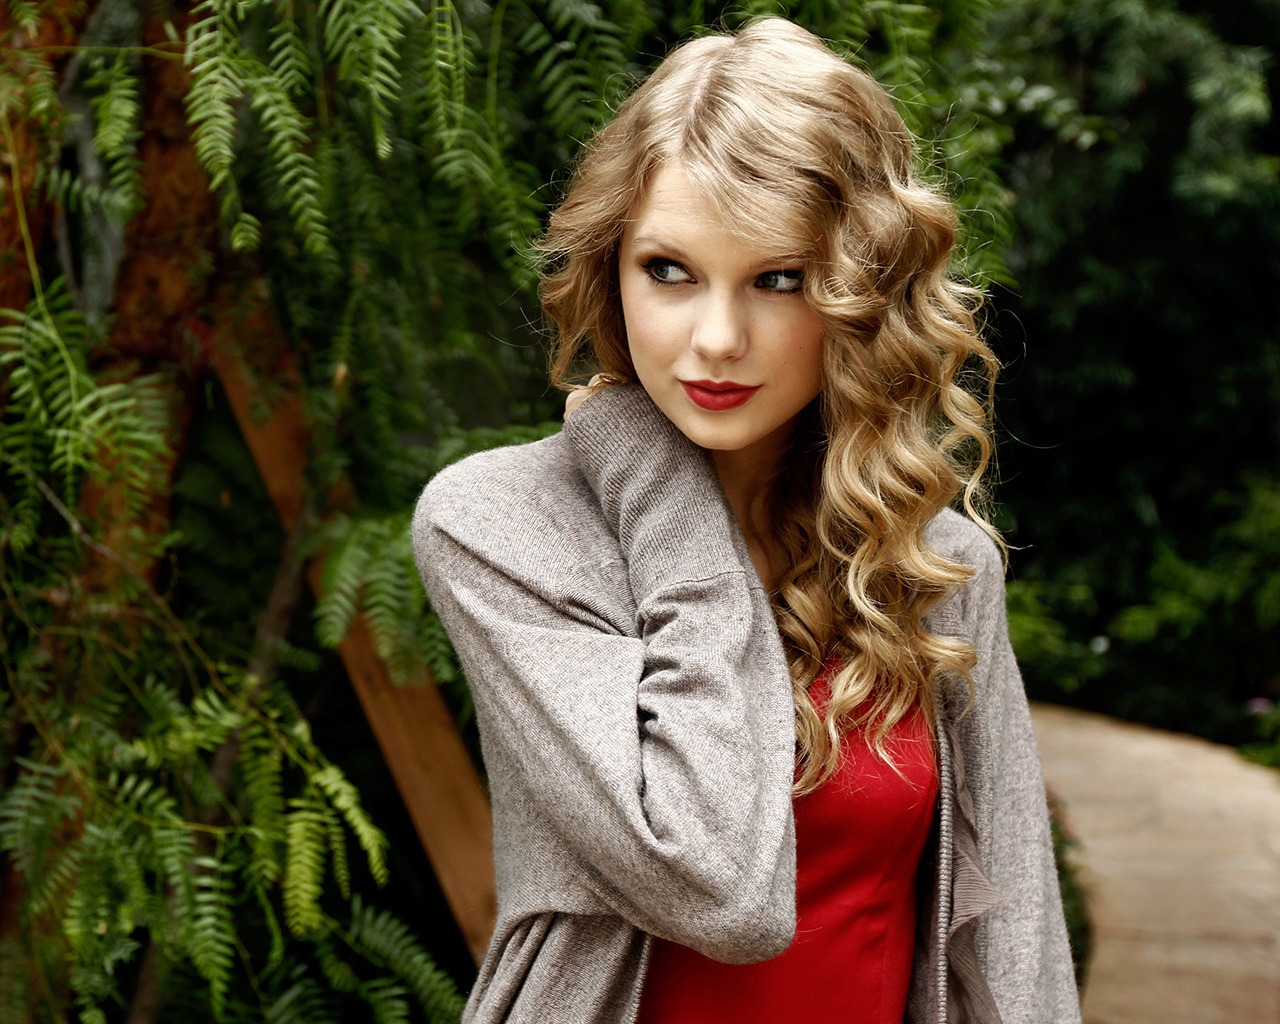 Smiling Taylor Swift Actress 1280 x 1024 Wallpaper